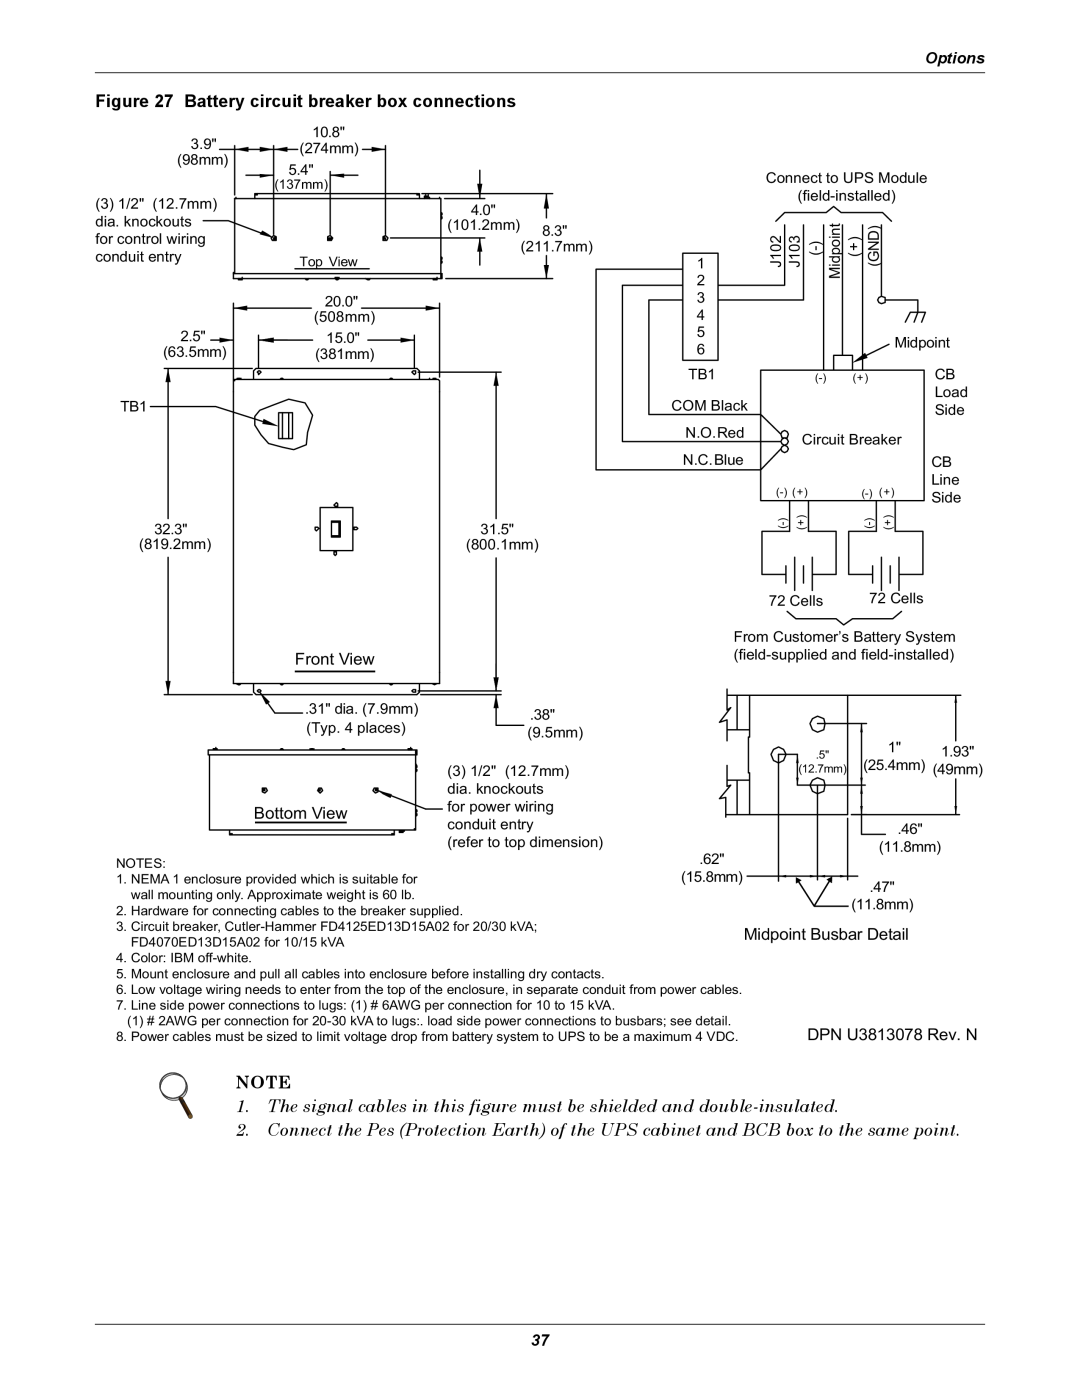 Emerson 208V, 10-30kVA installation manual Battery circuit breaker box connections, Options 